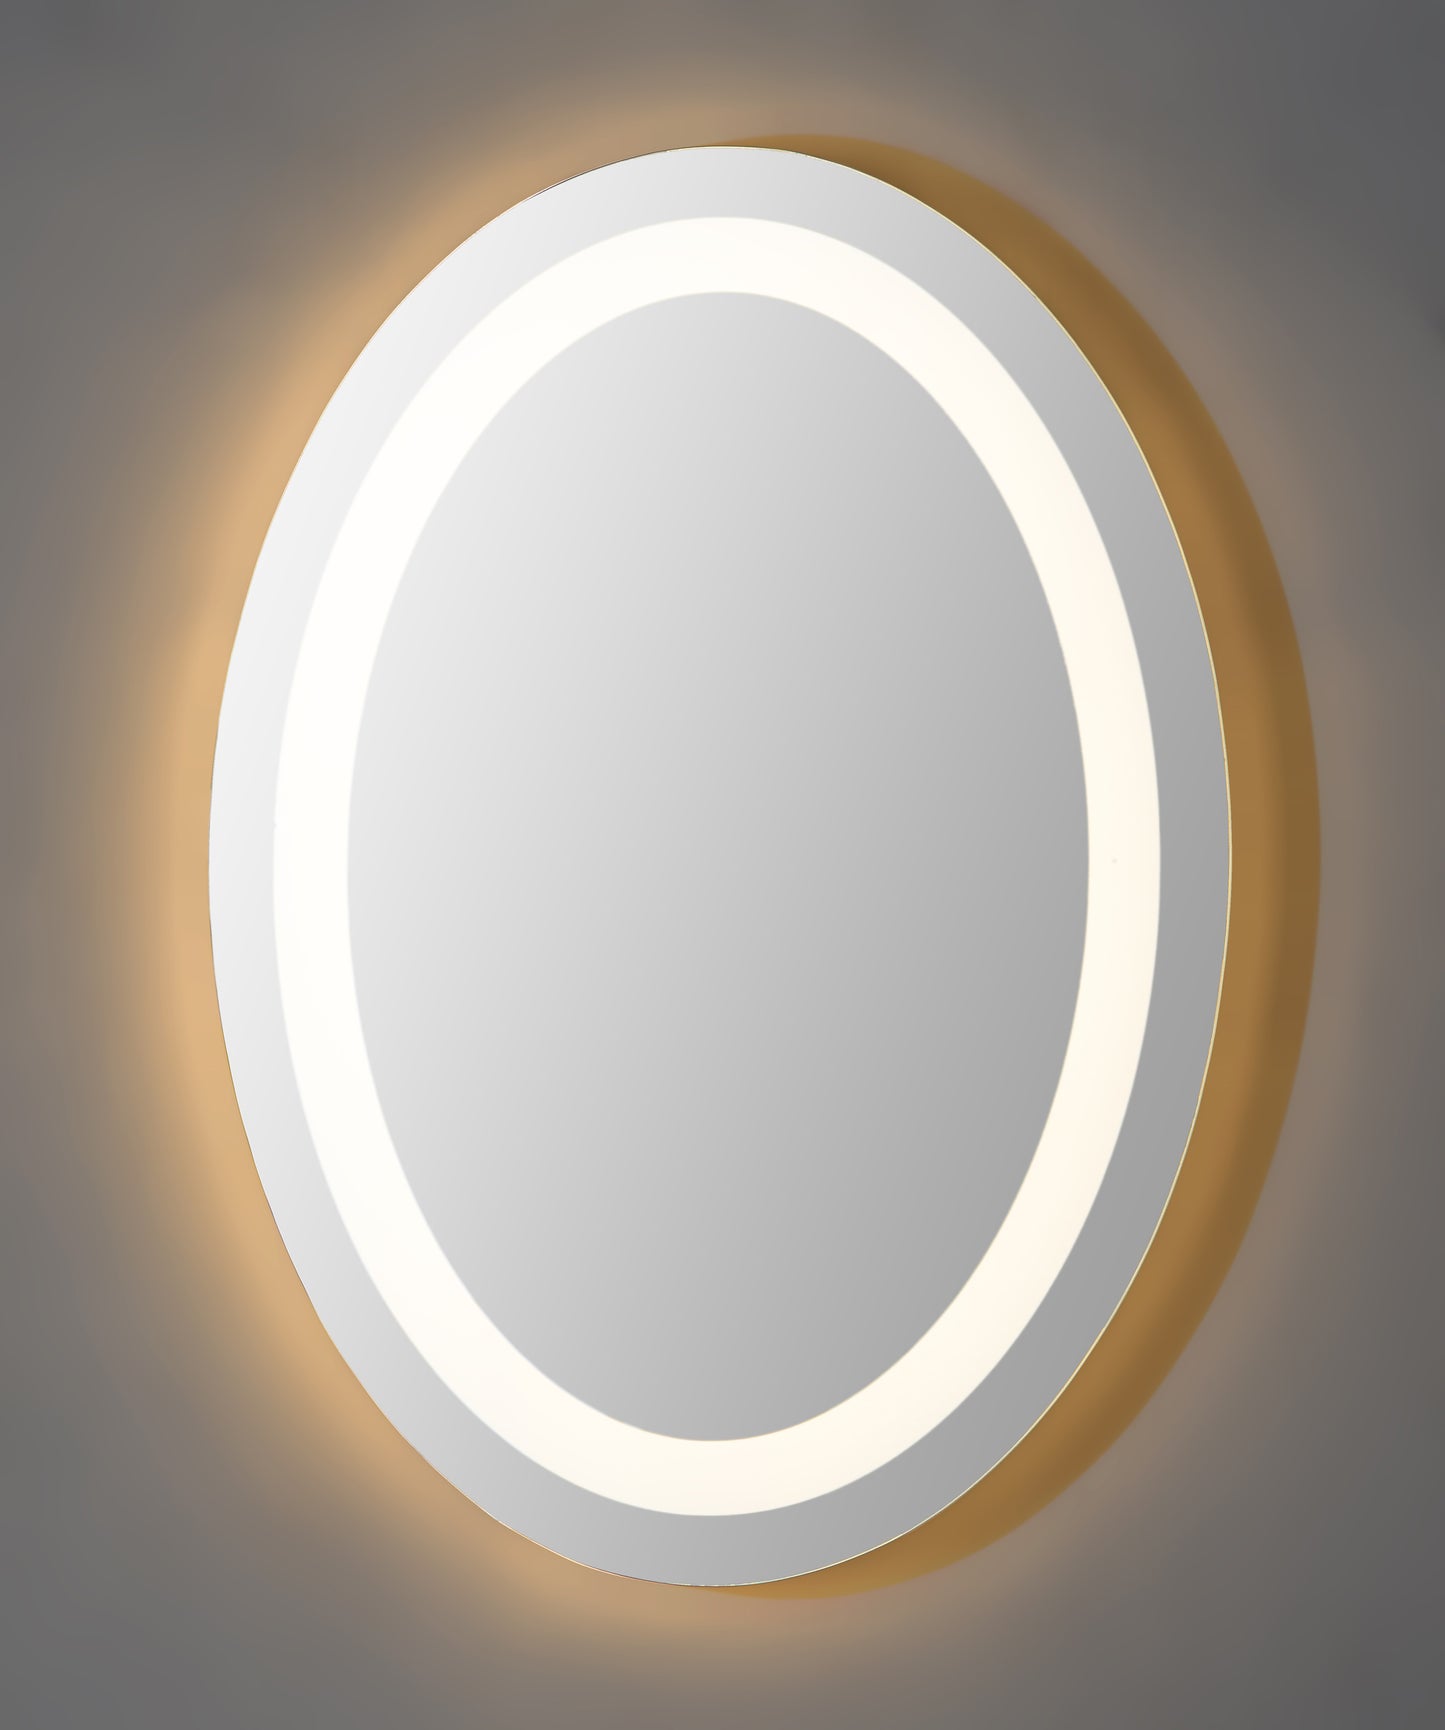 Oval shaped frame less backlit mirror.